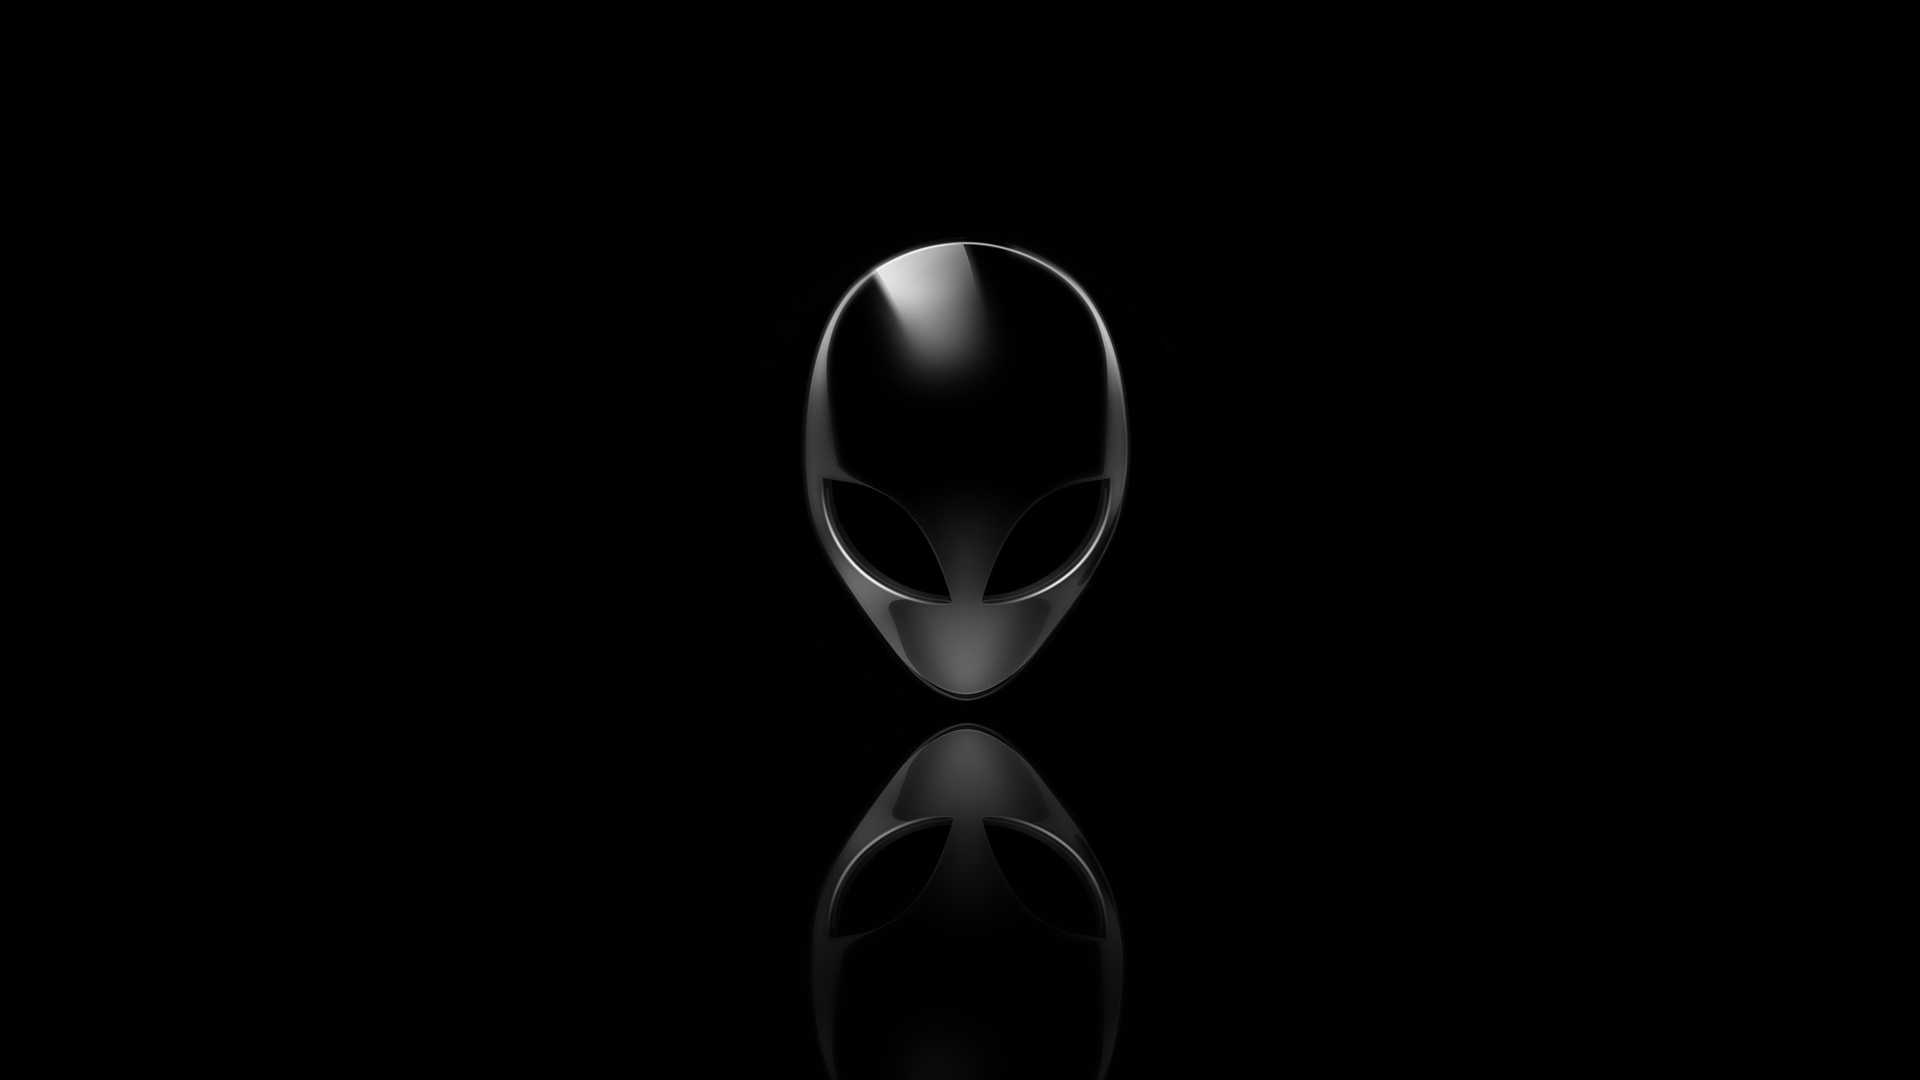 alienware logo reflection black background 1920x1080 1080p wallpaper